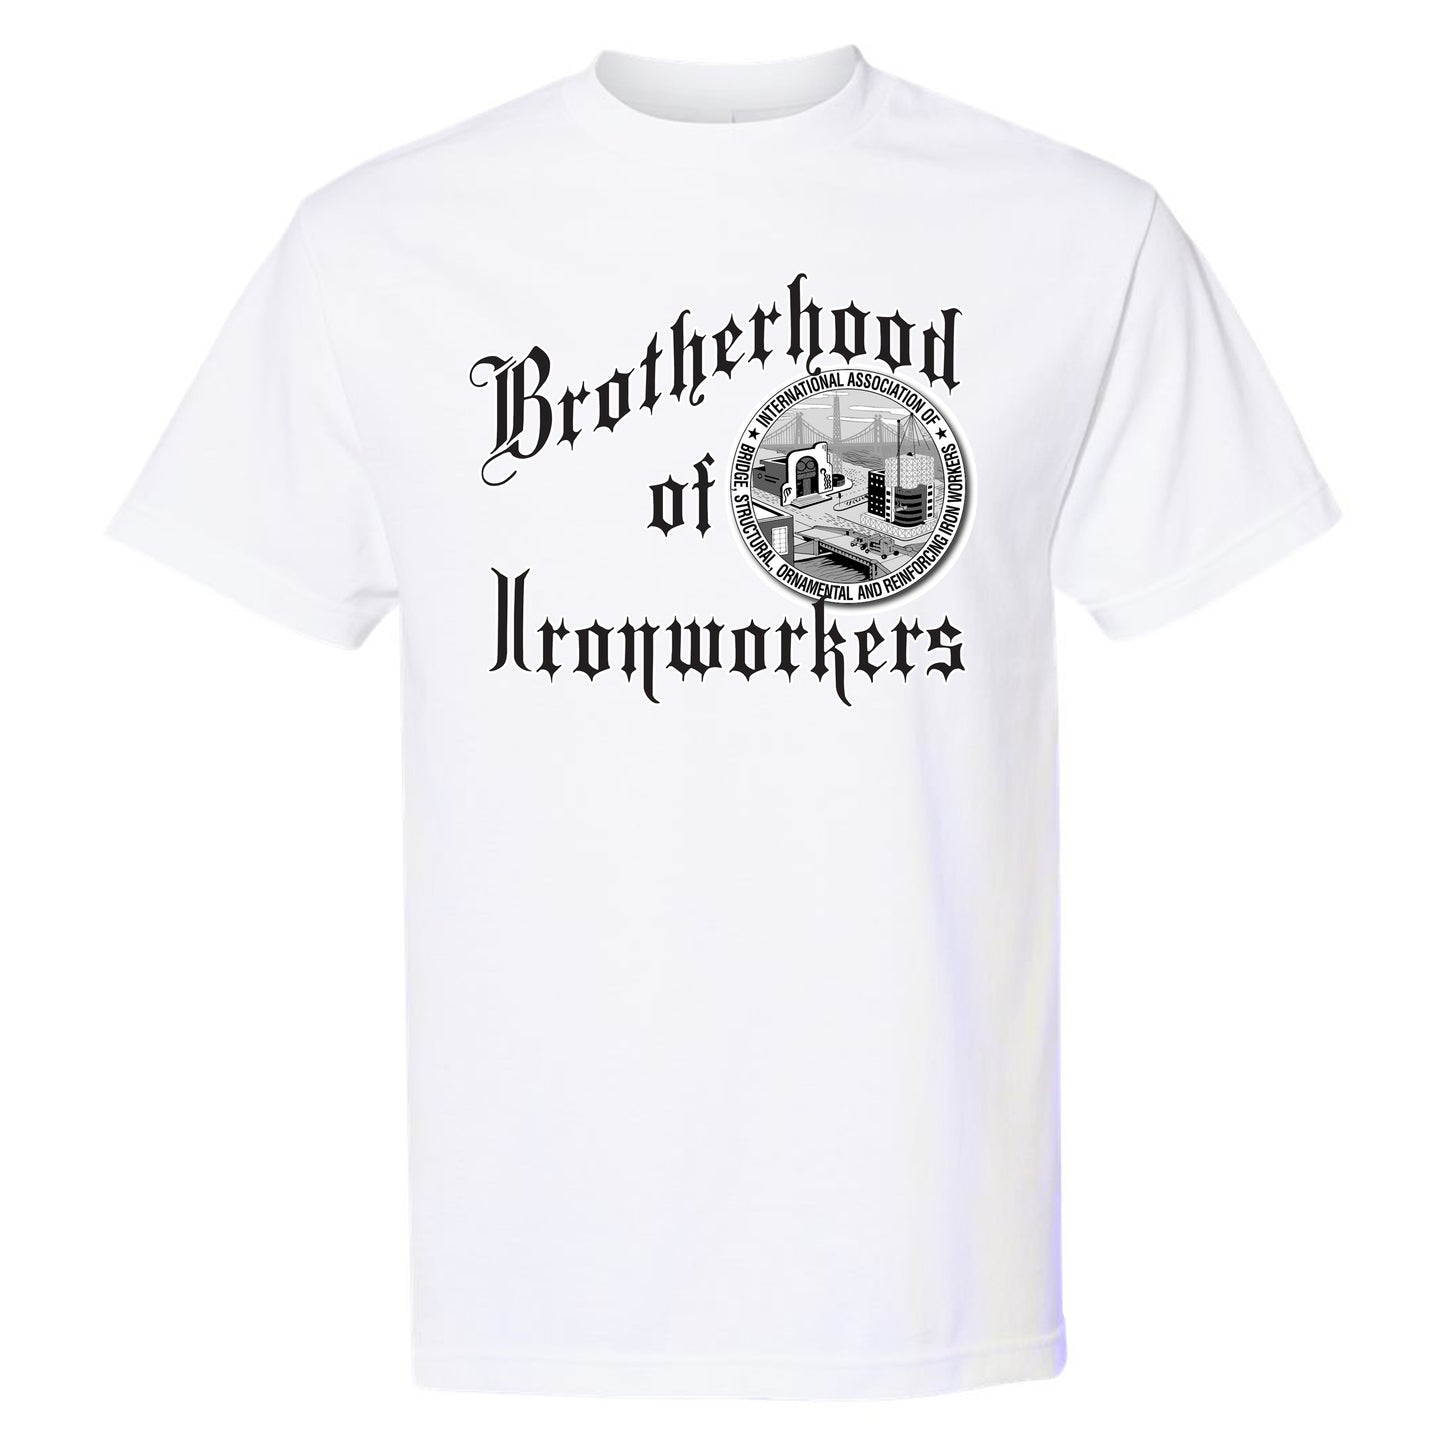 BROTHERHOOD OF IRONWORKERS T-SHIRT